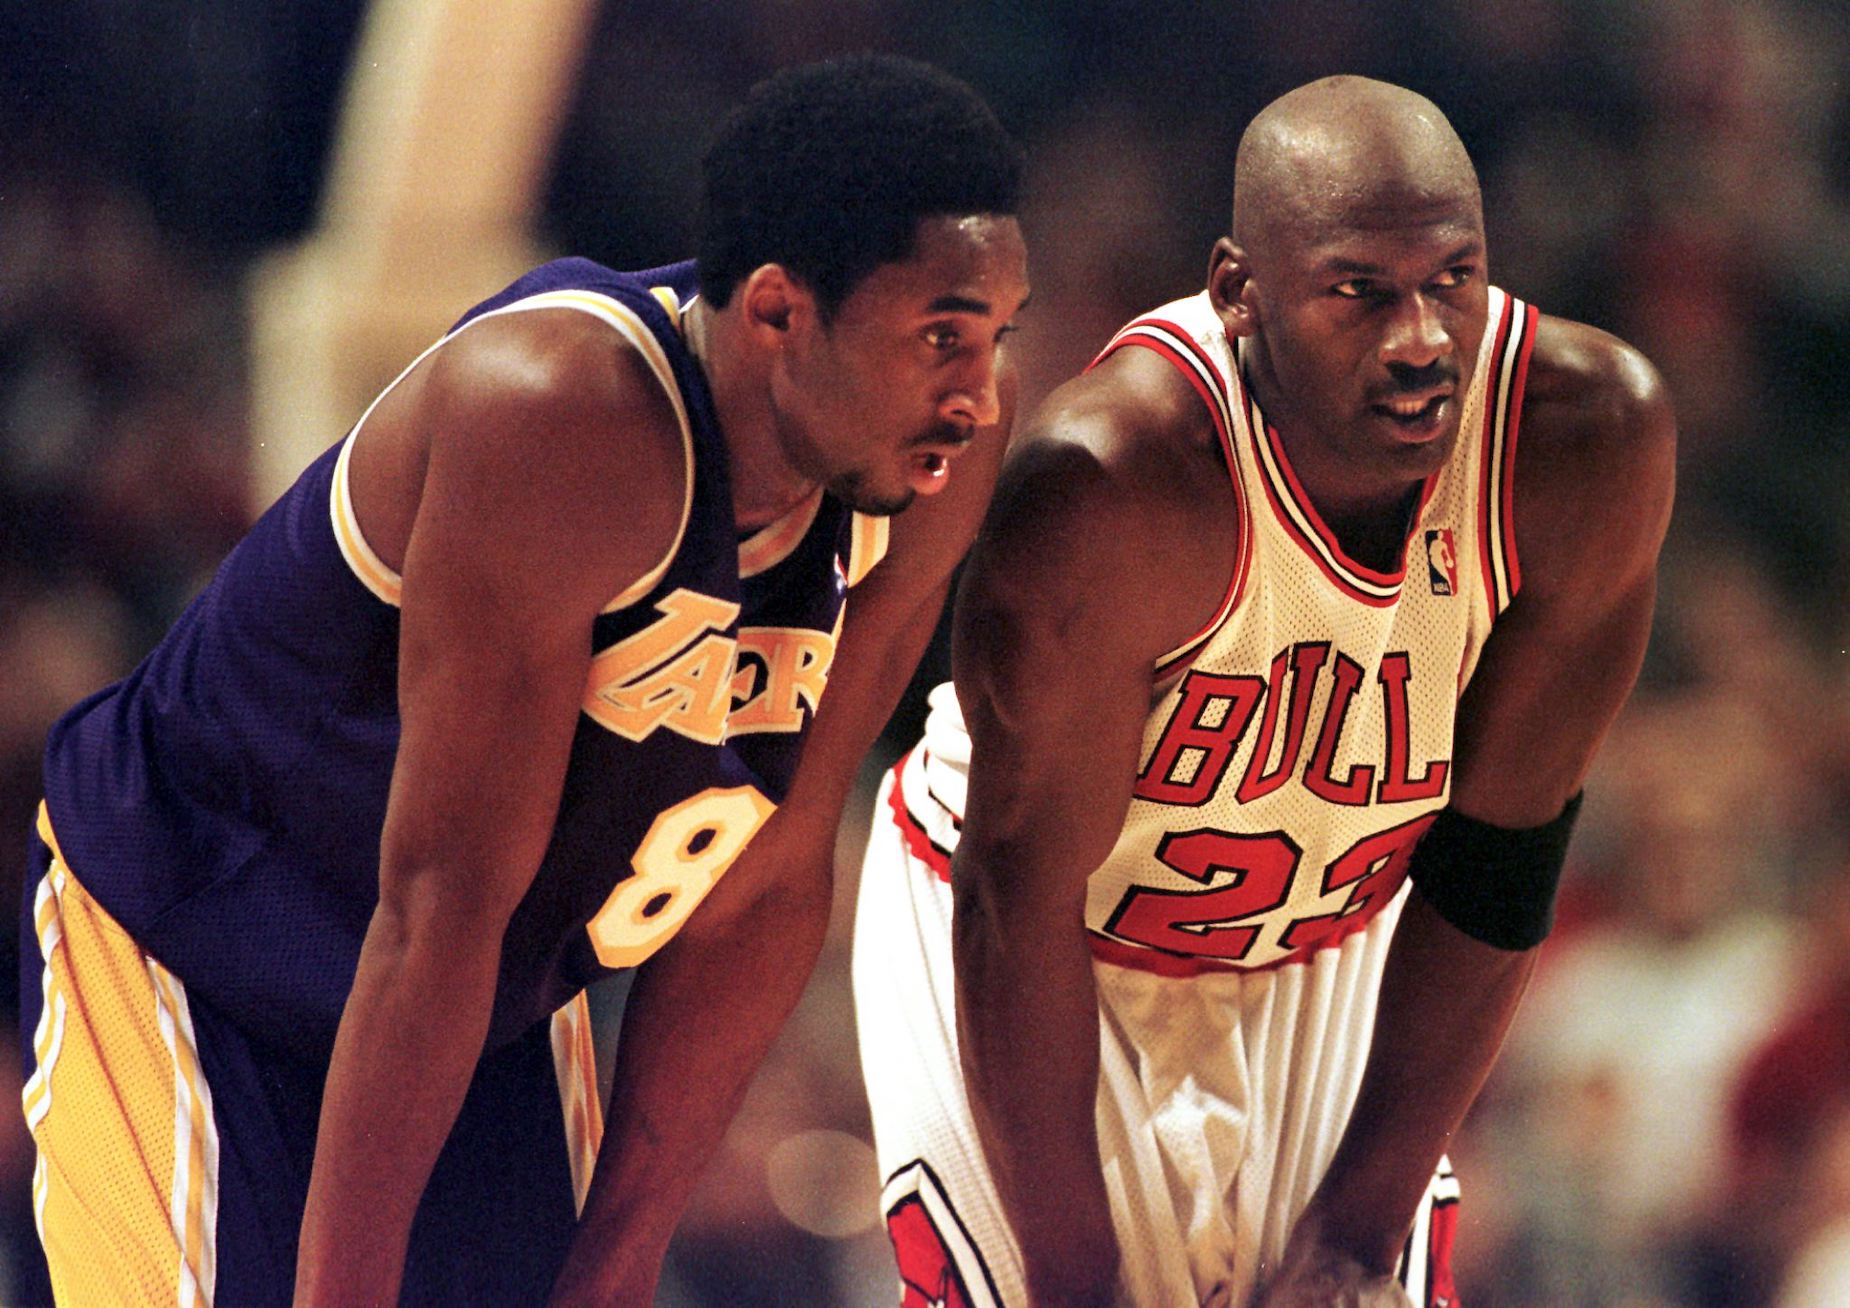 Kobe Bryant and Michael Jordan talk during a 1997 NBA game